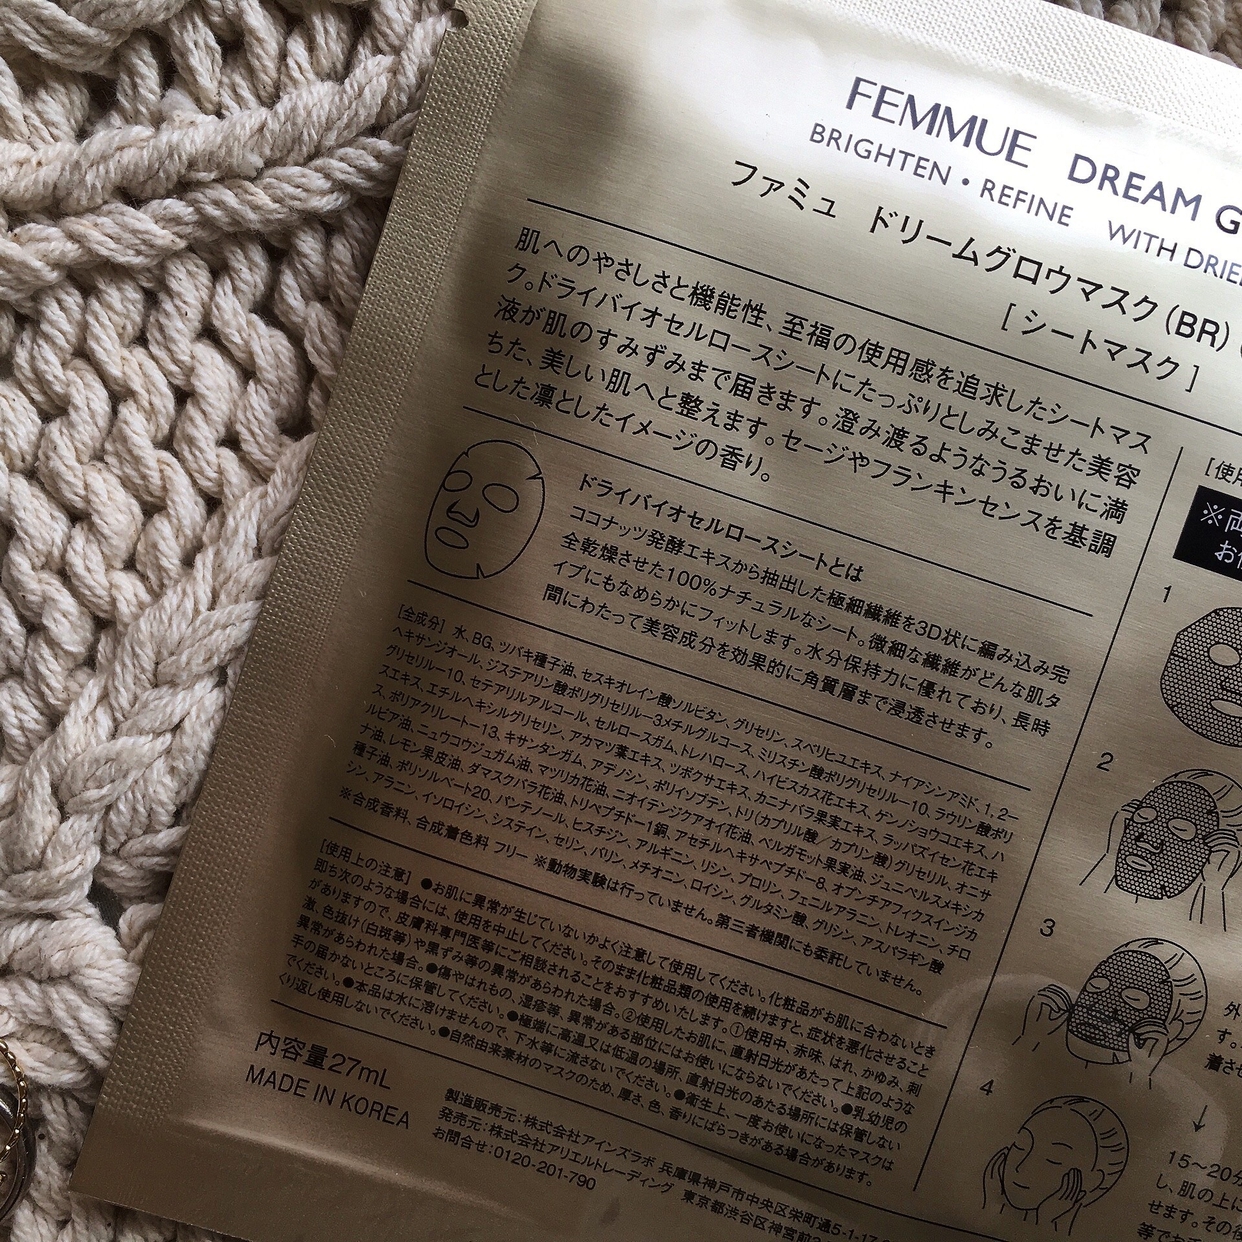 FEMMUE(ファミュ) ドリームグロウマスク ホリデーコンプリートセットを使った梅ちゃんさんのクチコミ画像5